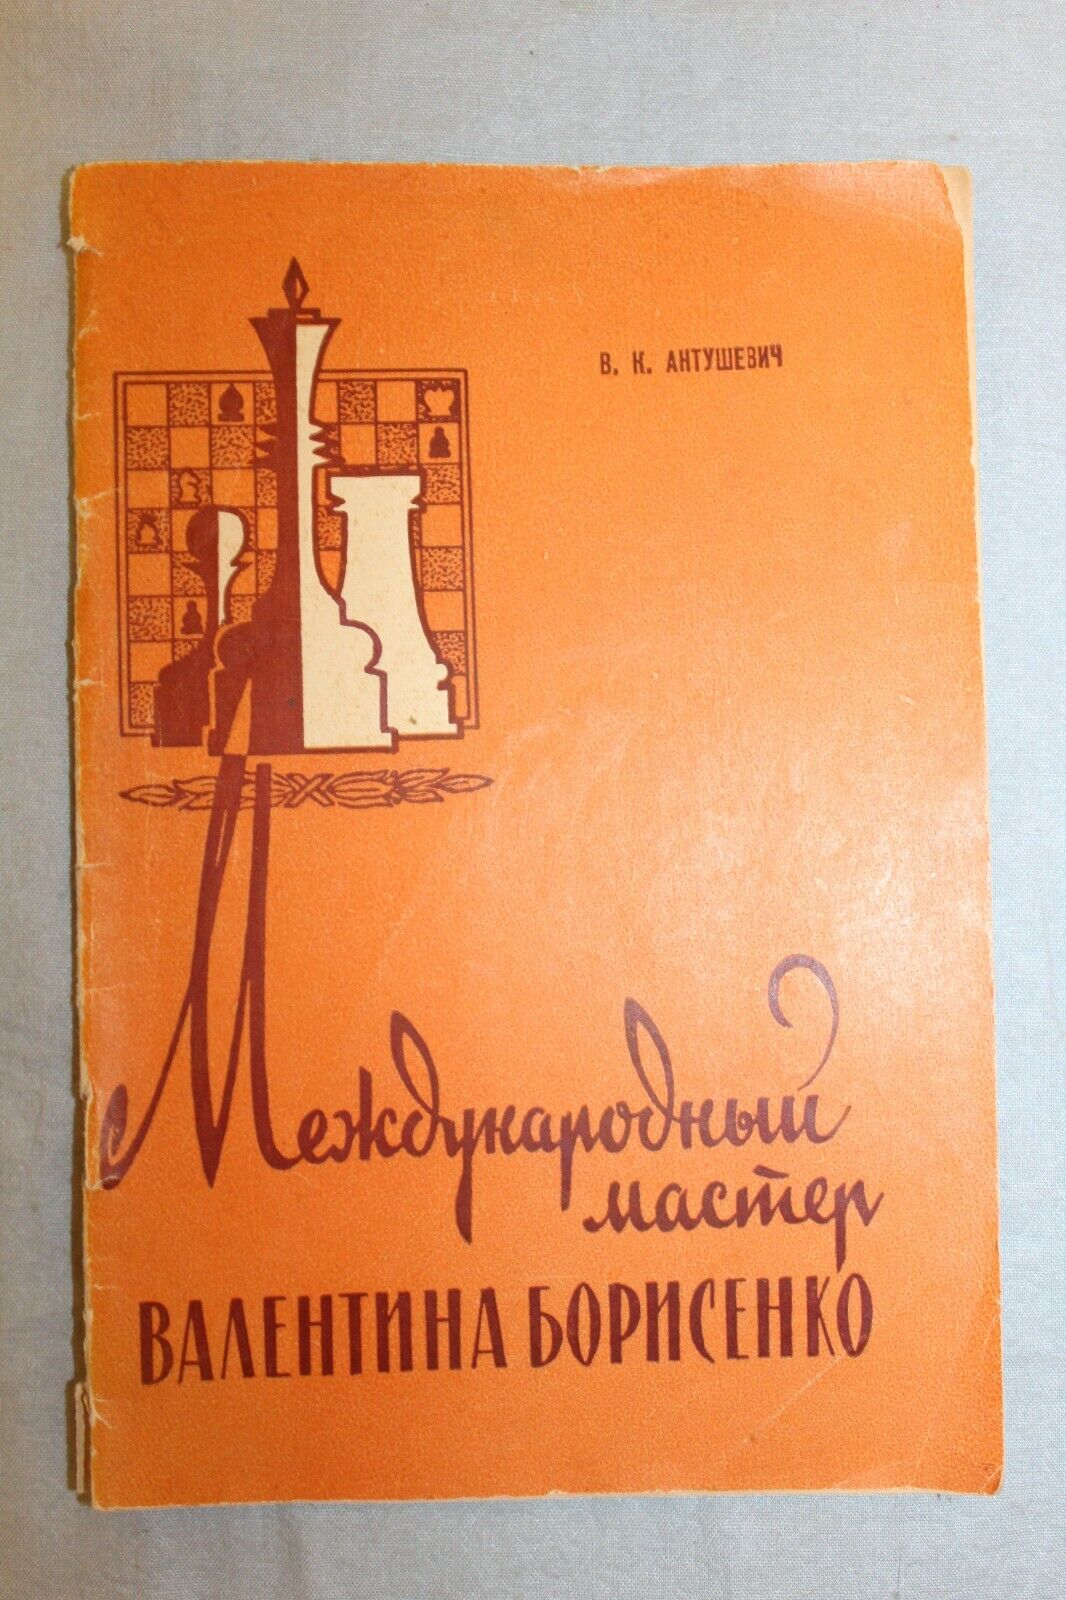 11701.Soviet Chess Book signed by V.Borisenko. International Grandmaster.Antushevich